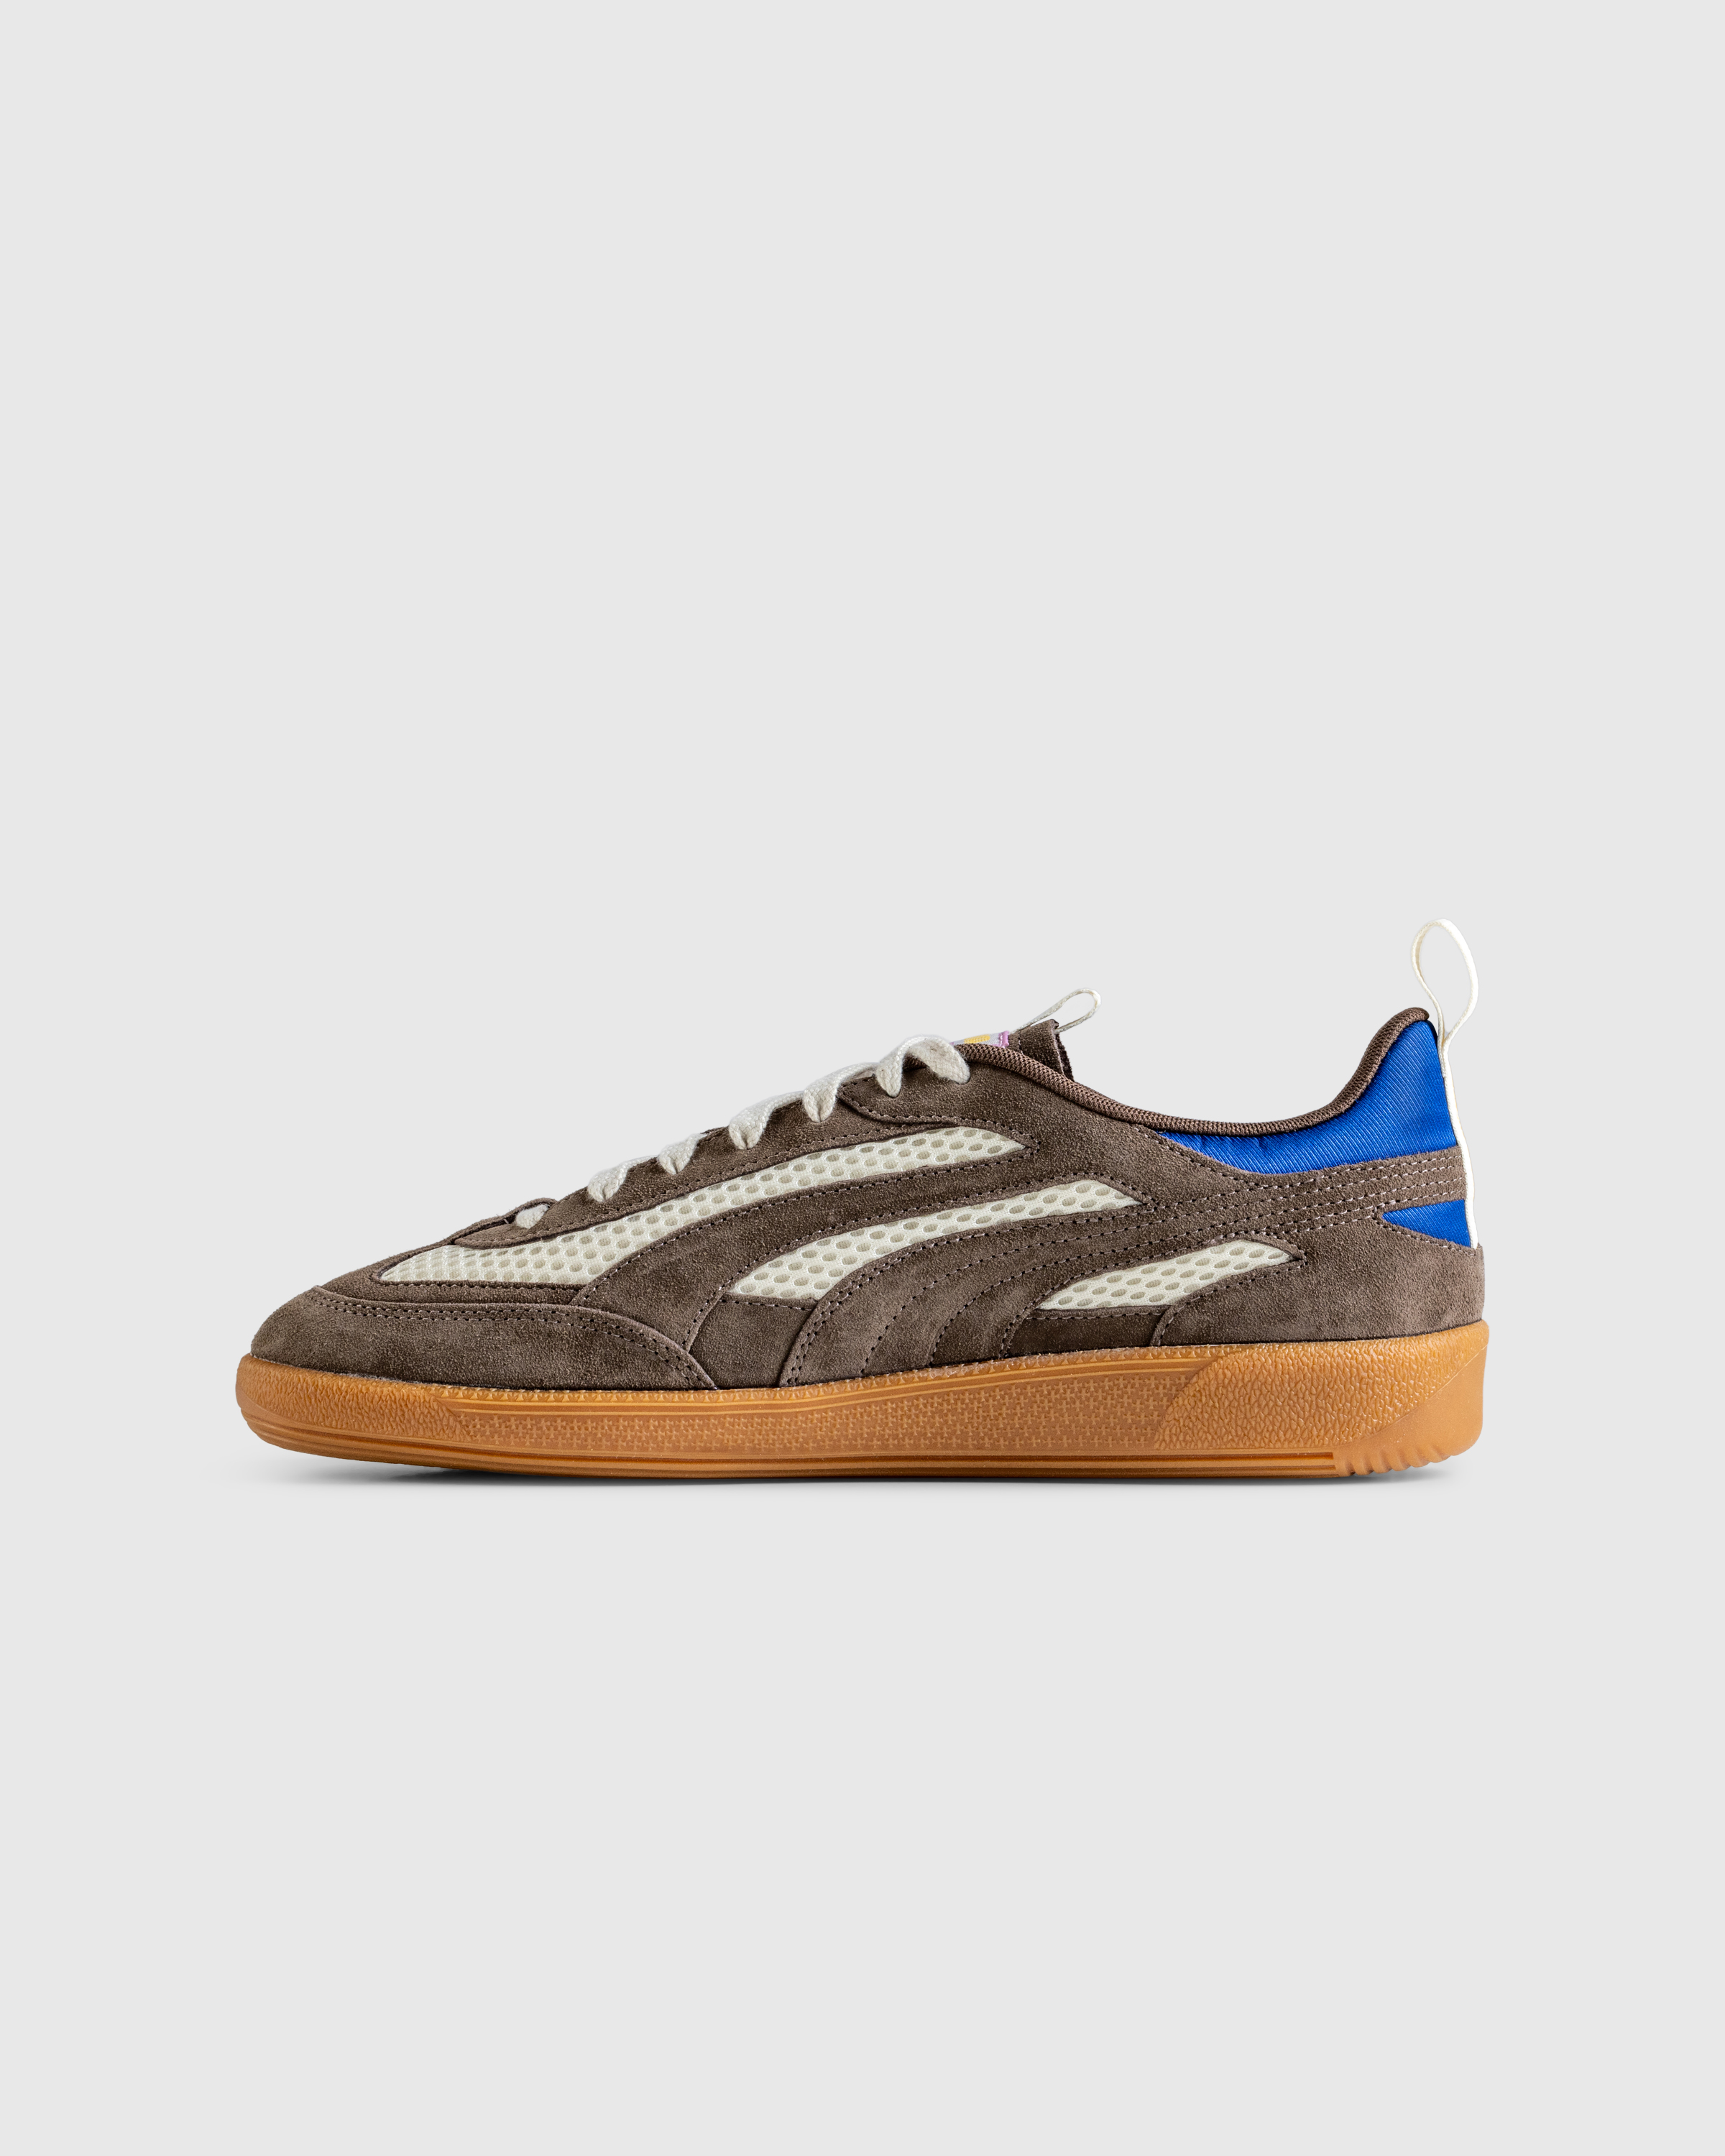 Puma x KidSuper – Palermo Chocolate - Sneakers - Brown - Image 2